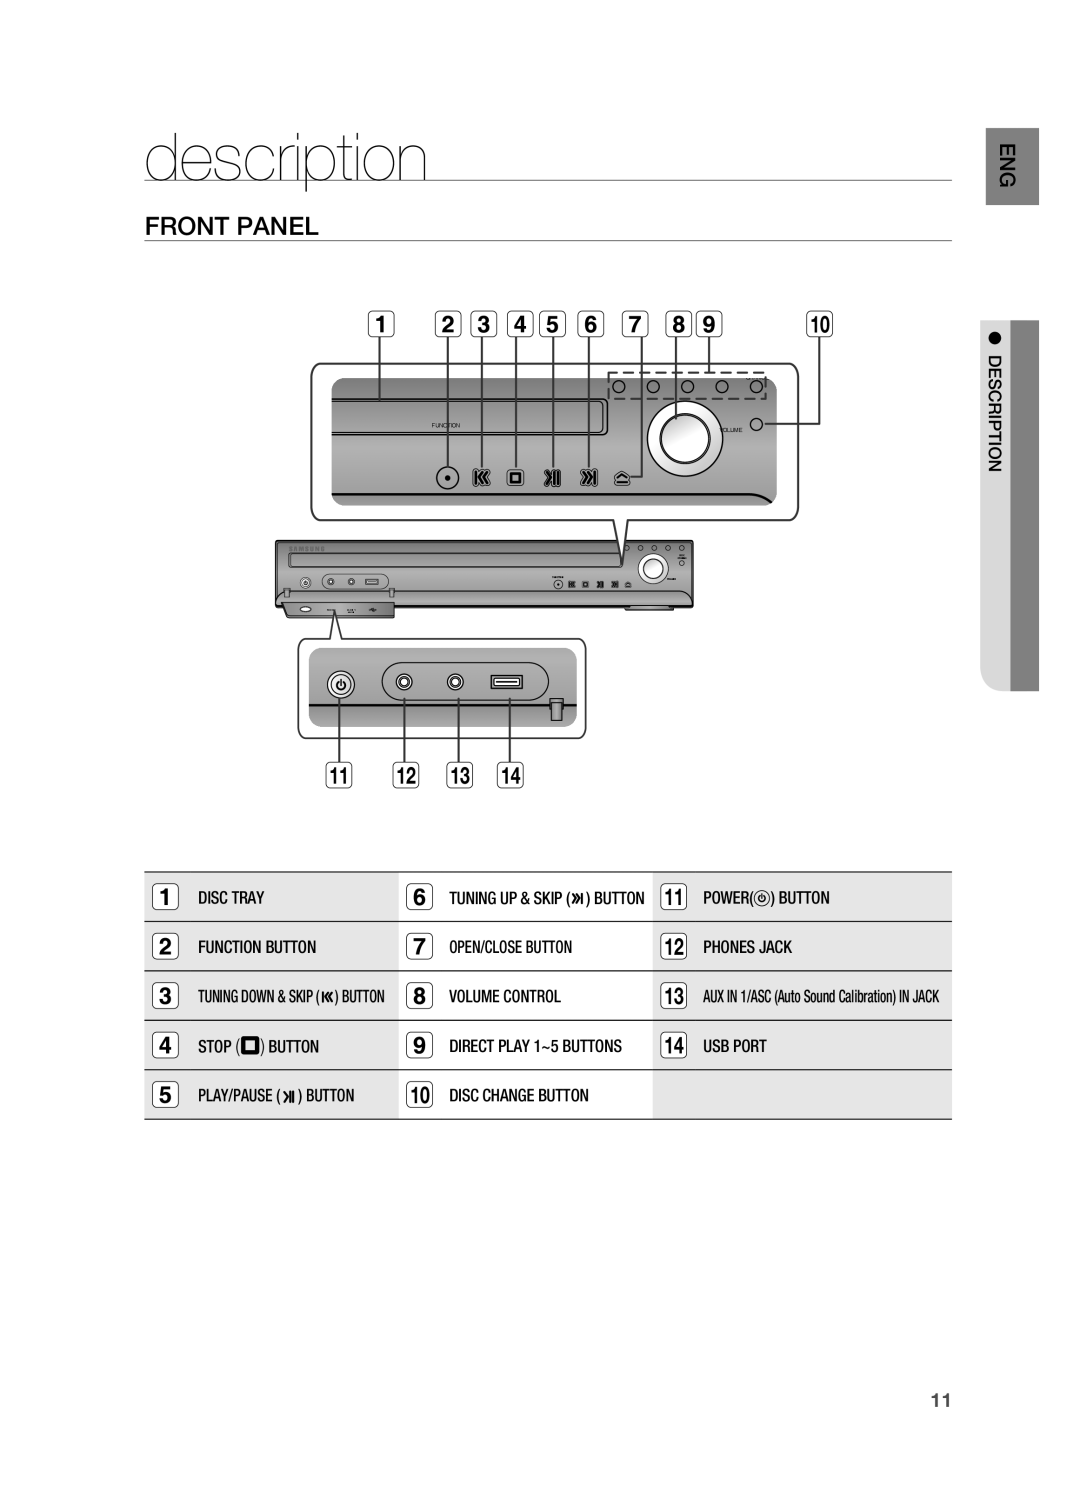 Samsung HT-TWZ415 user manual description, Front Panel 